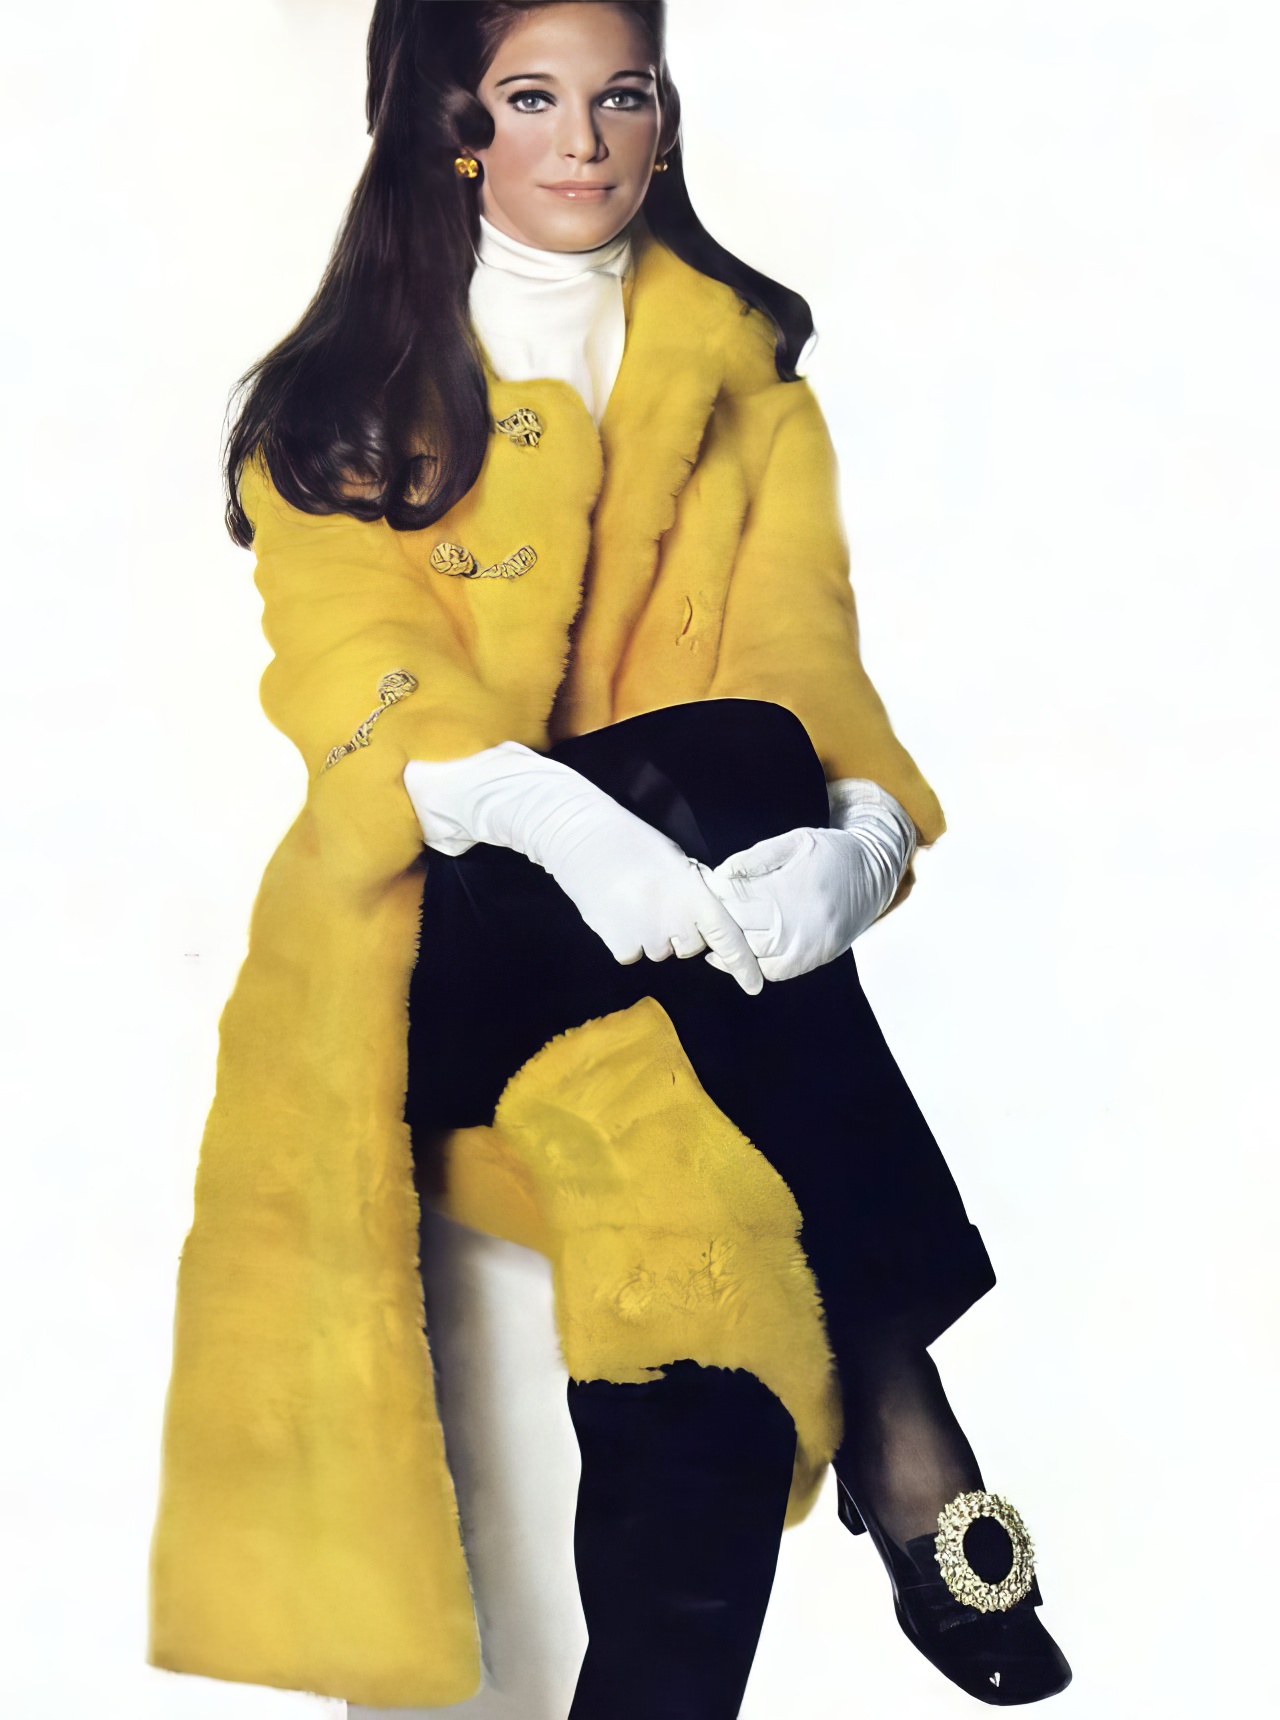 Ann Turkel in a chrome-yellow mink coat by Maximilian, 1968.